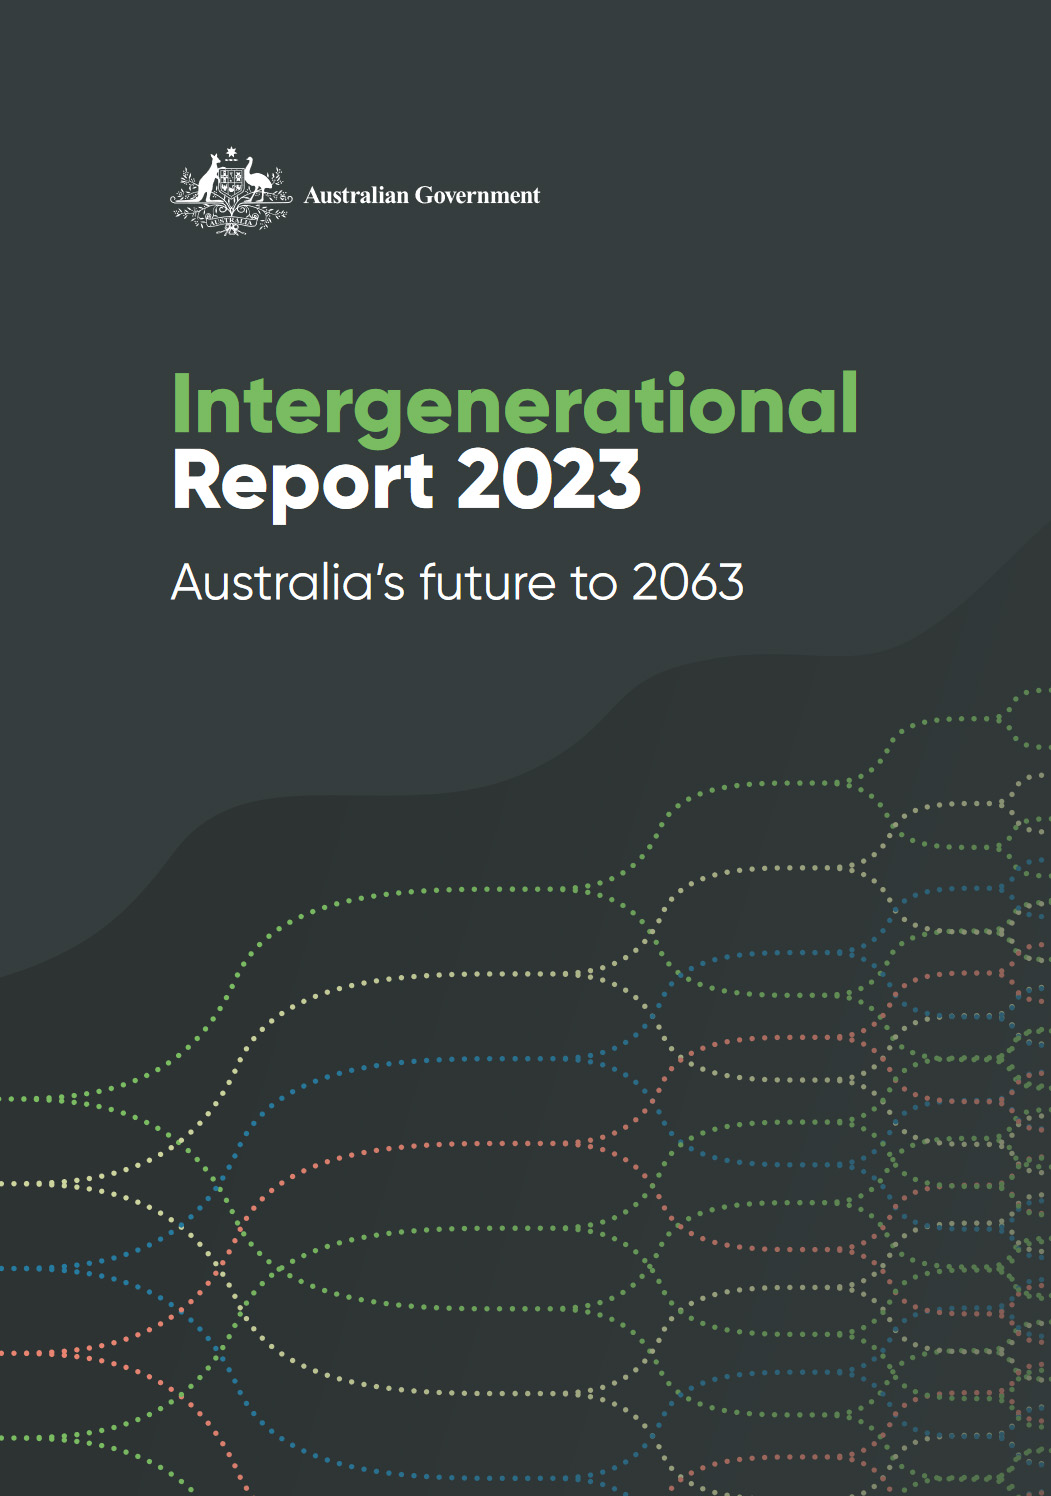 Intergenerational Report 2023